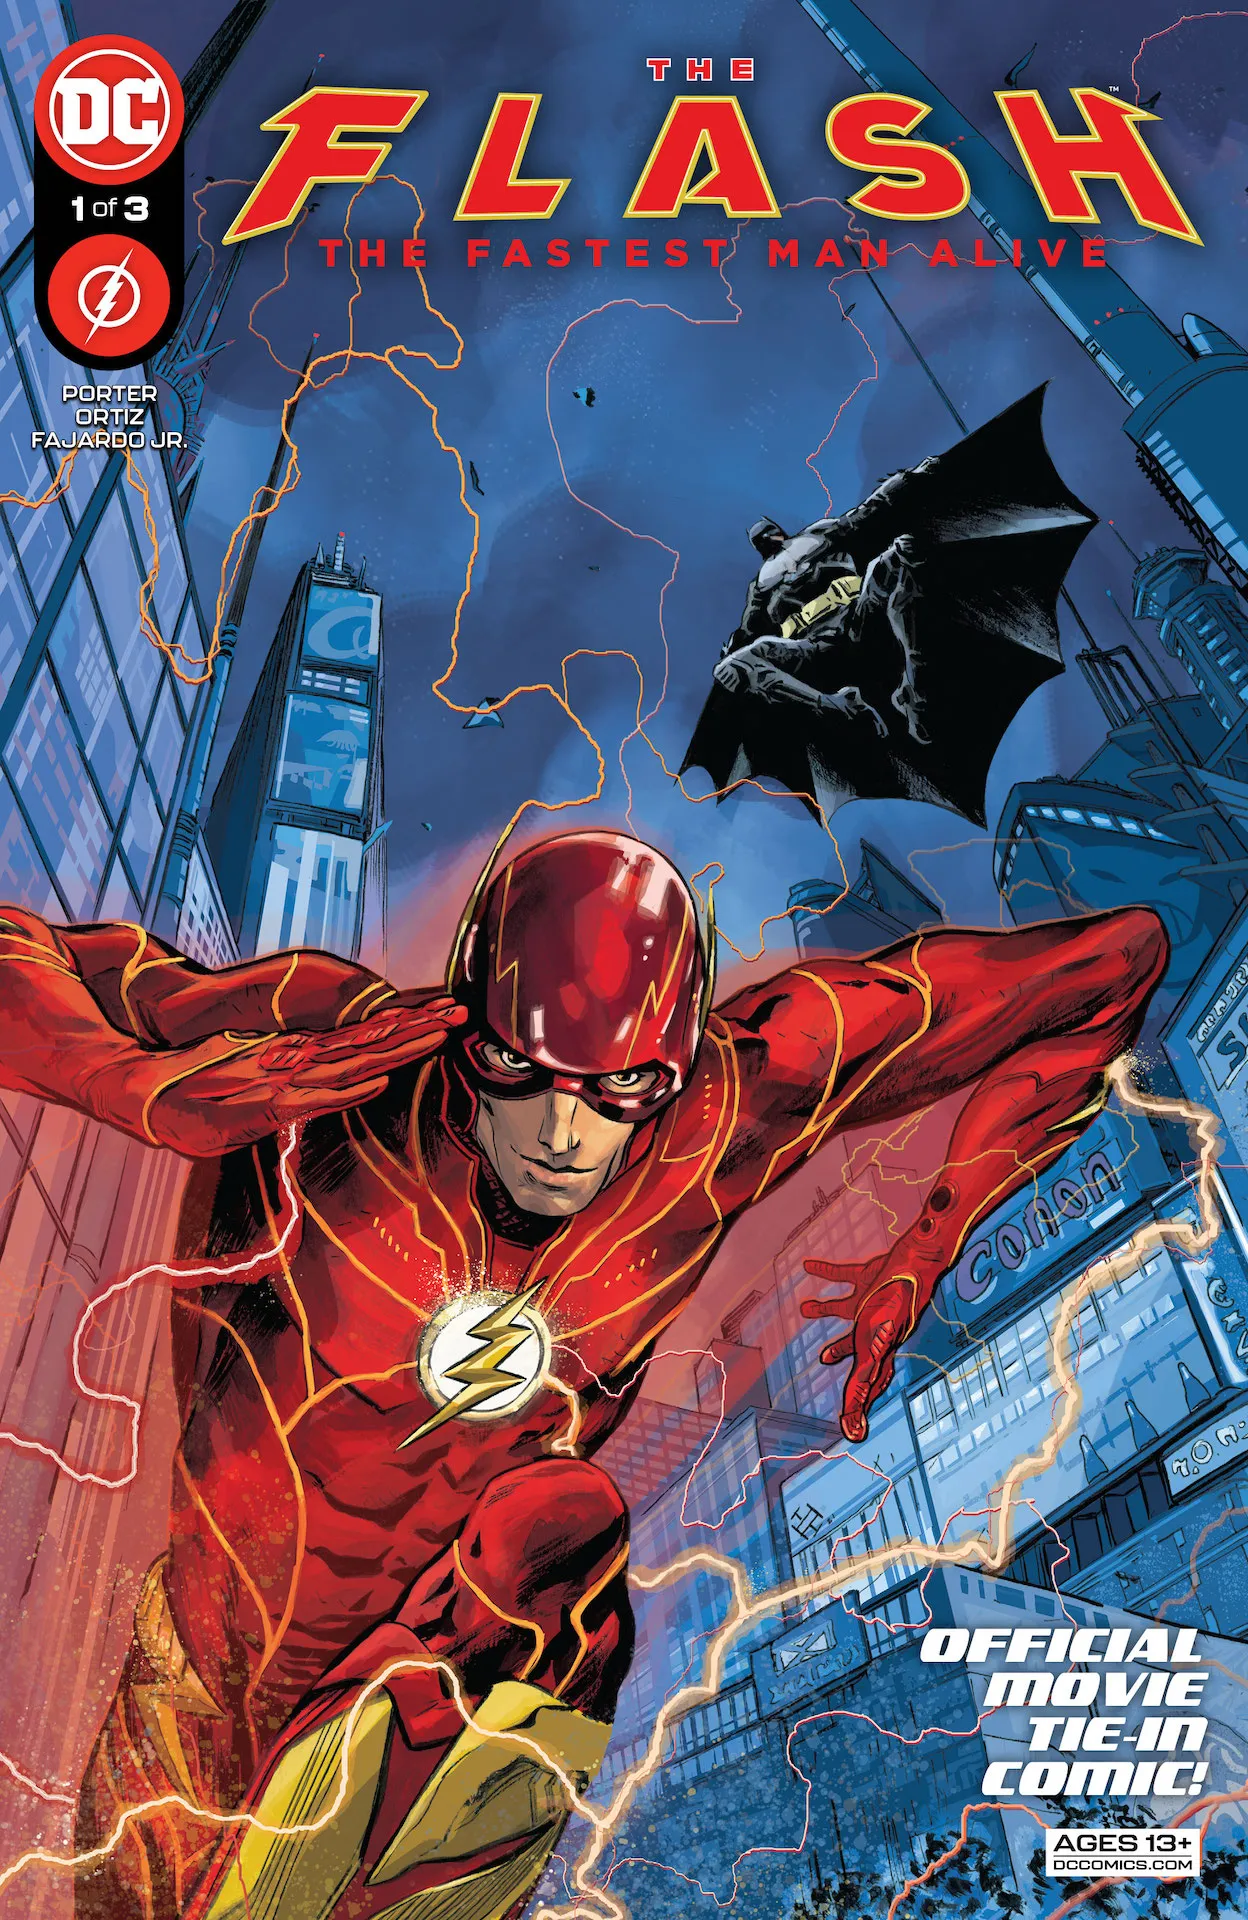 The flash movie tie in comic